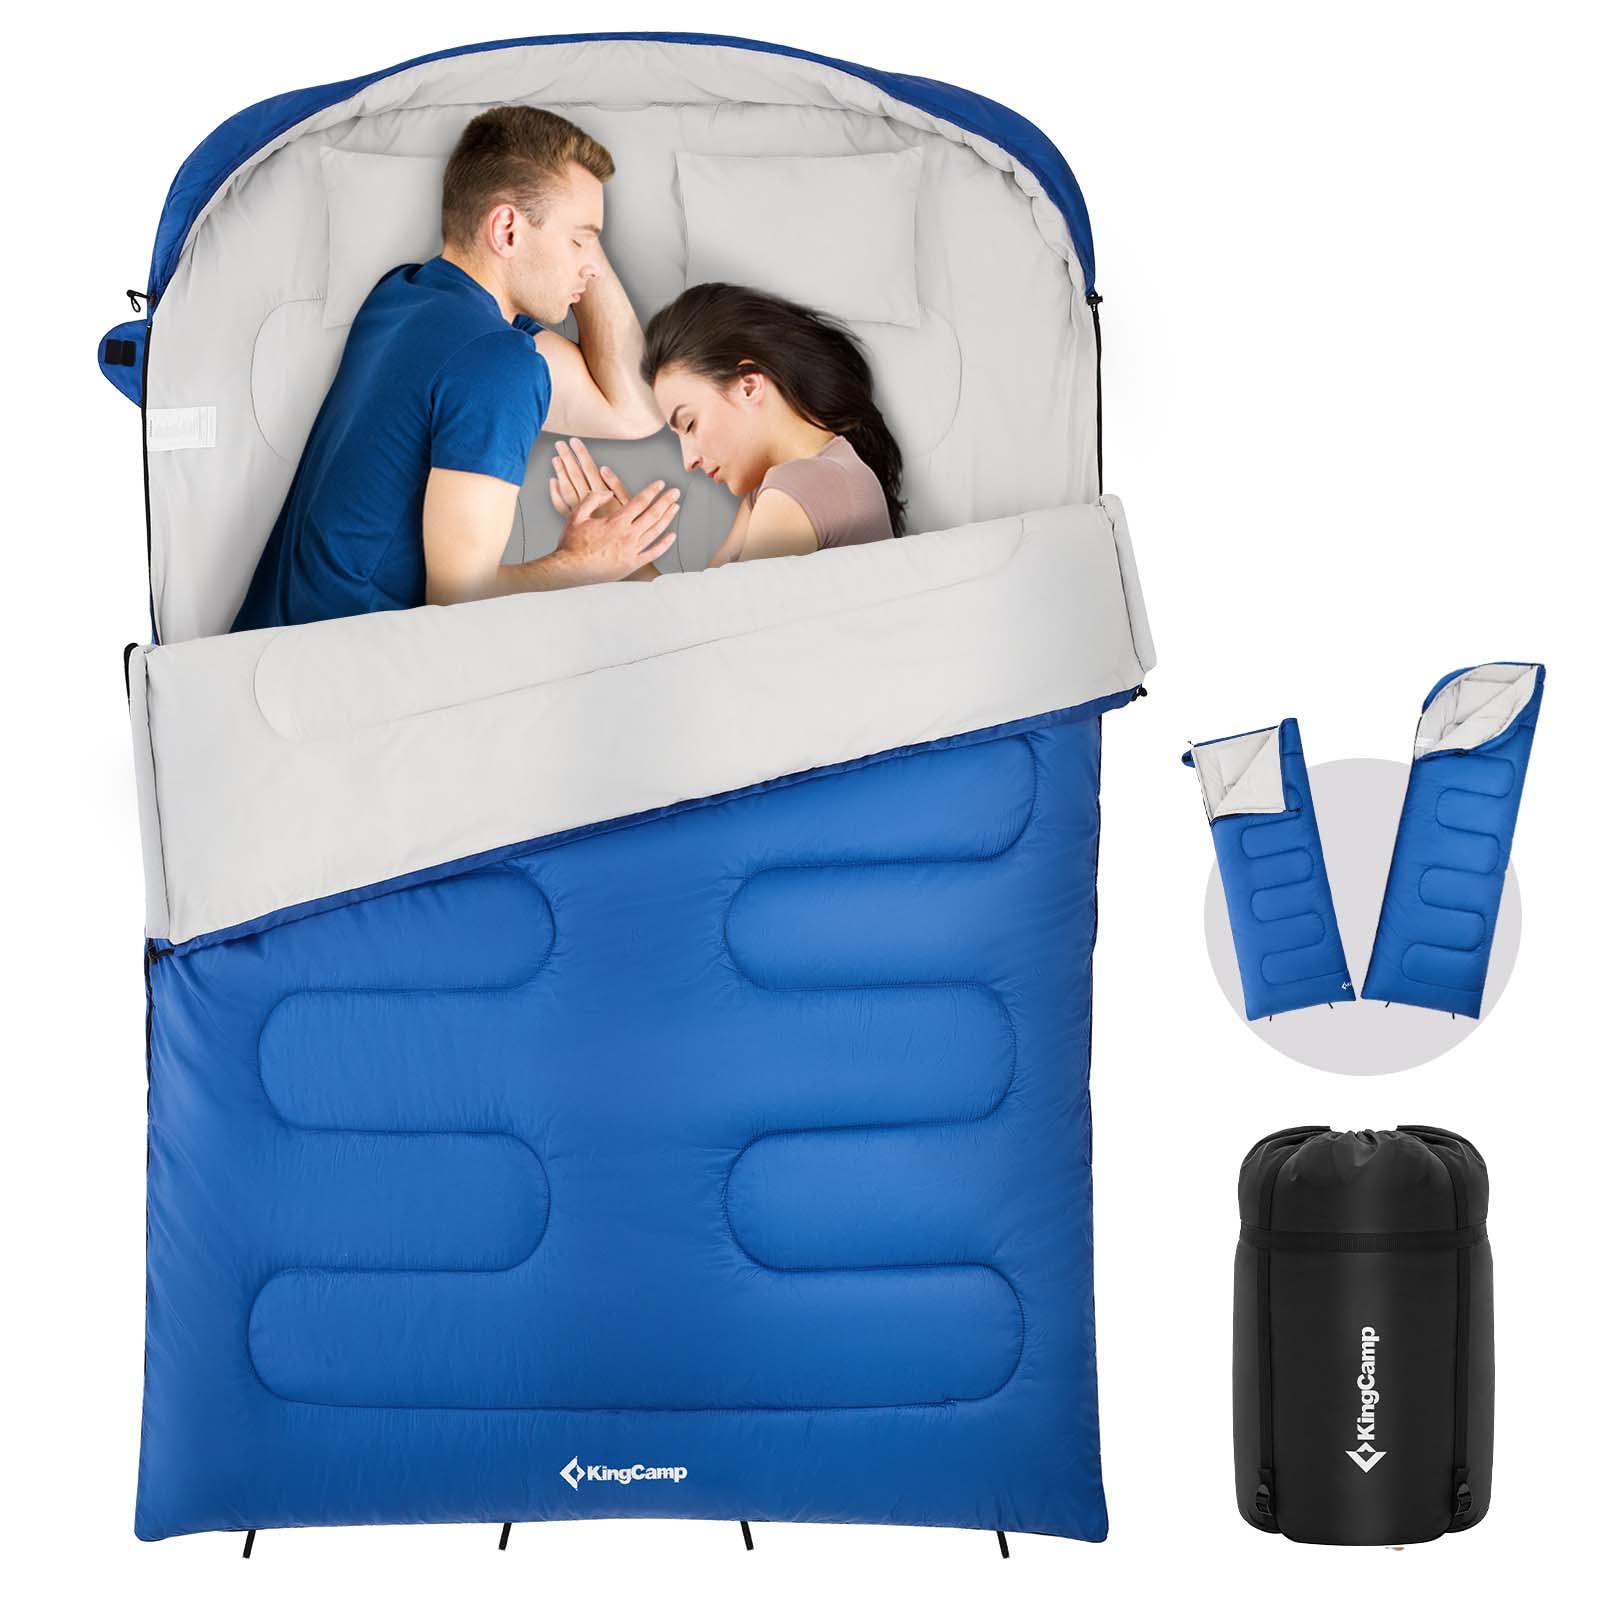 KingCamp キングキャンプ ダブル寝袋 大人用 XL ビッグトールサイズ 寝袋 枕2個付き キャンプ